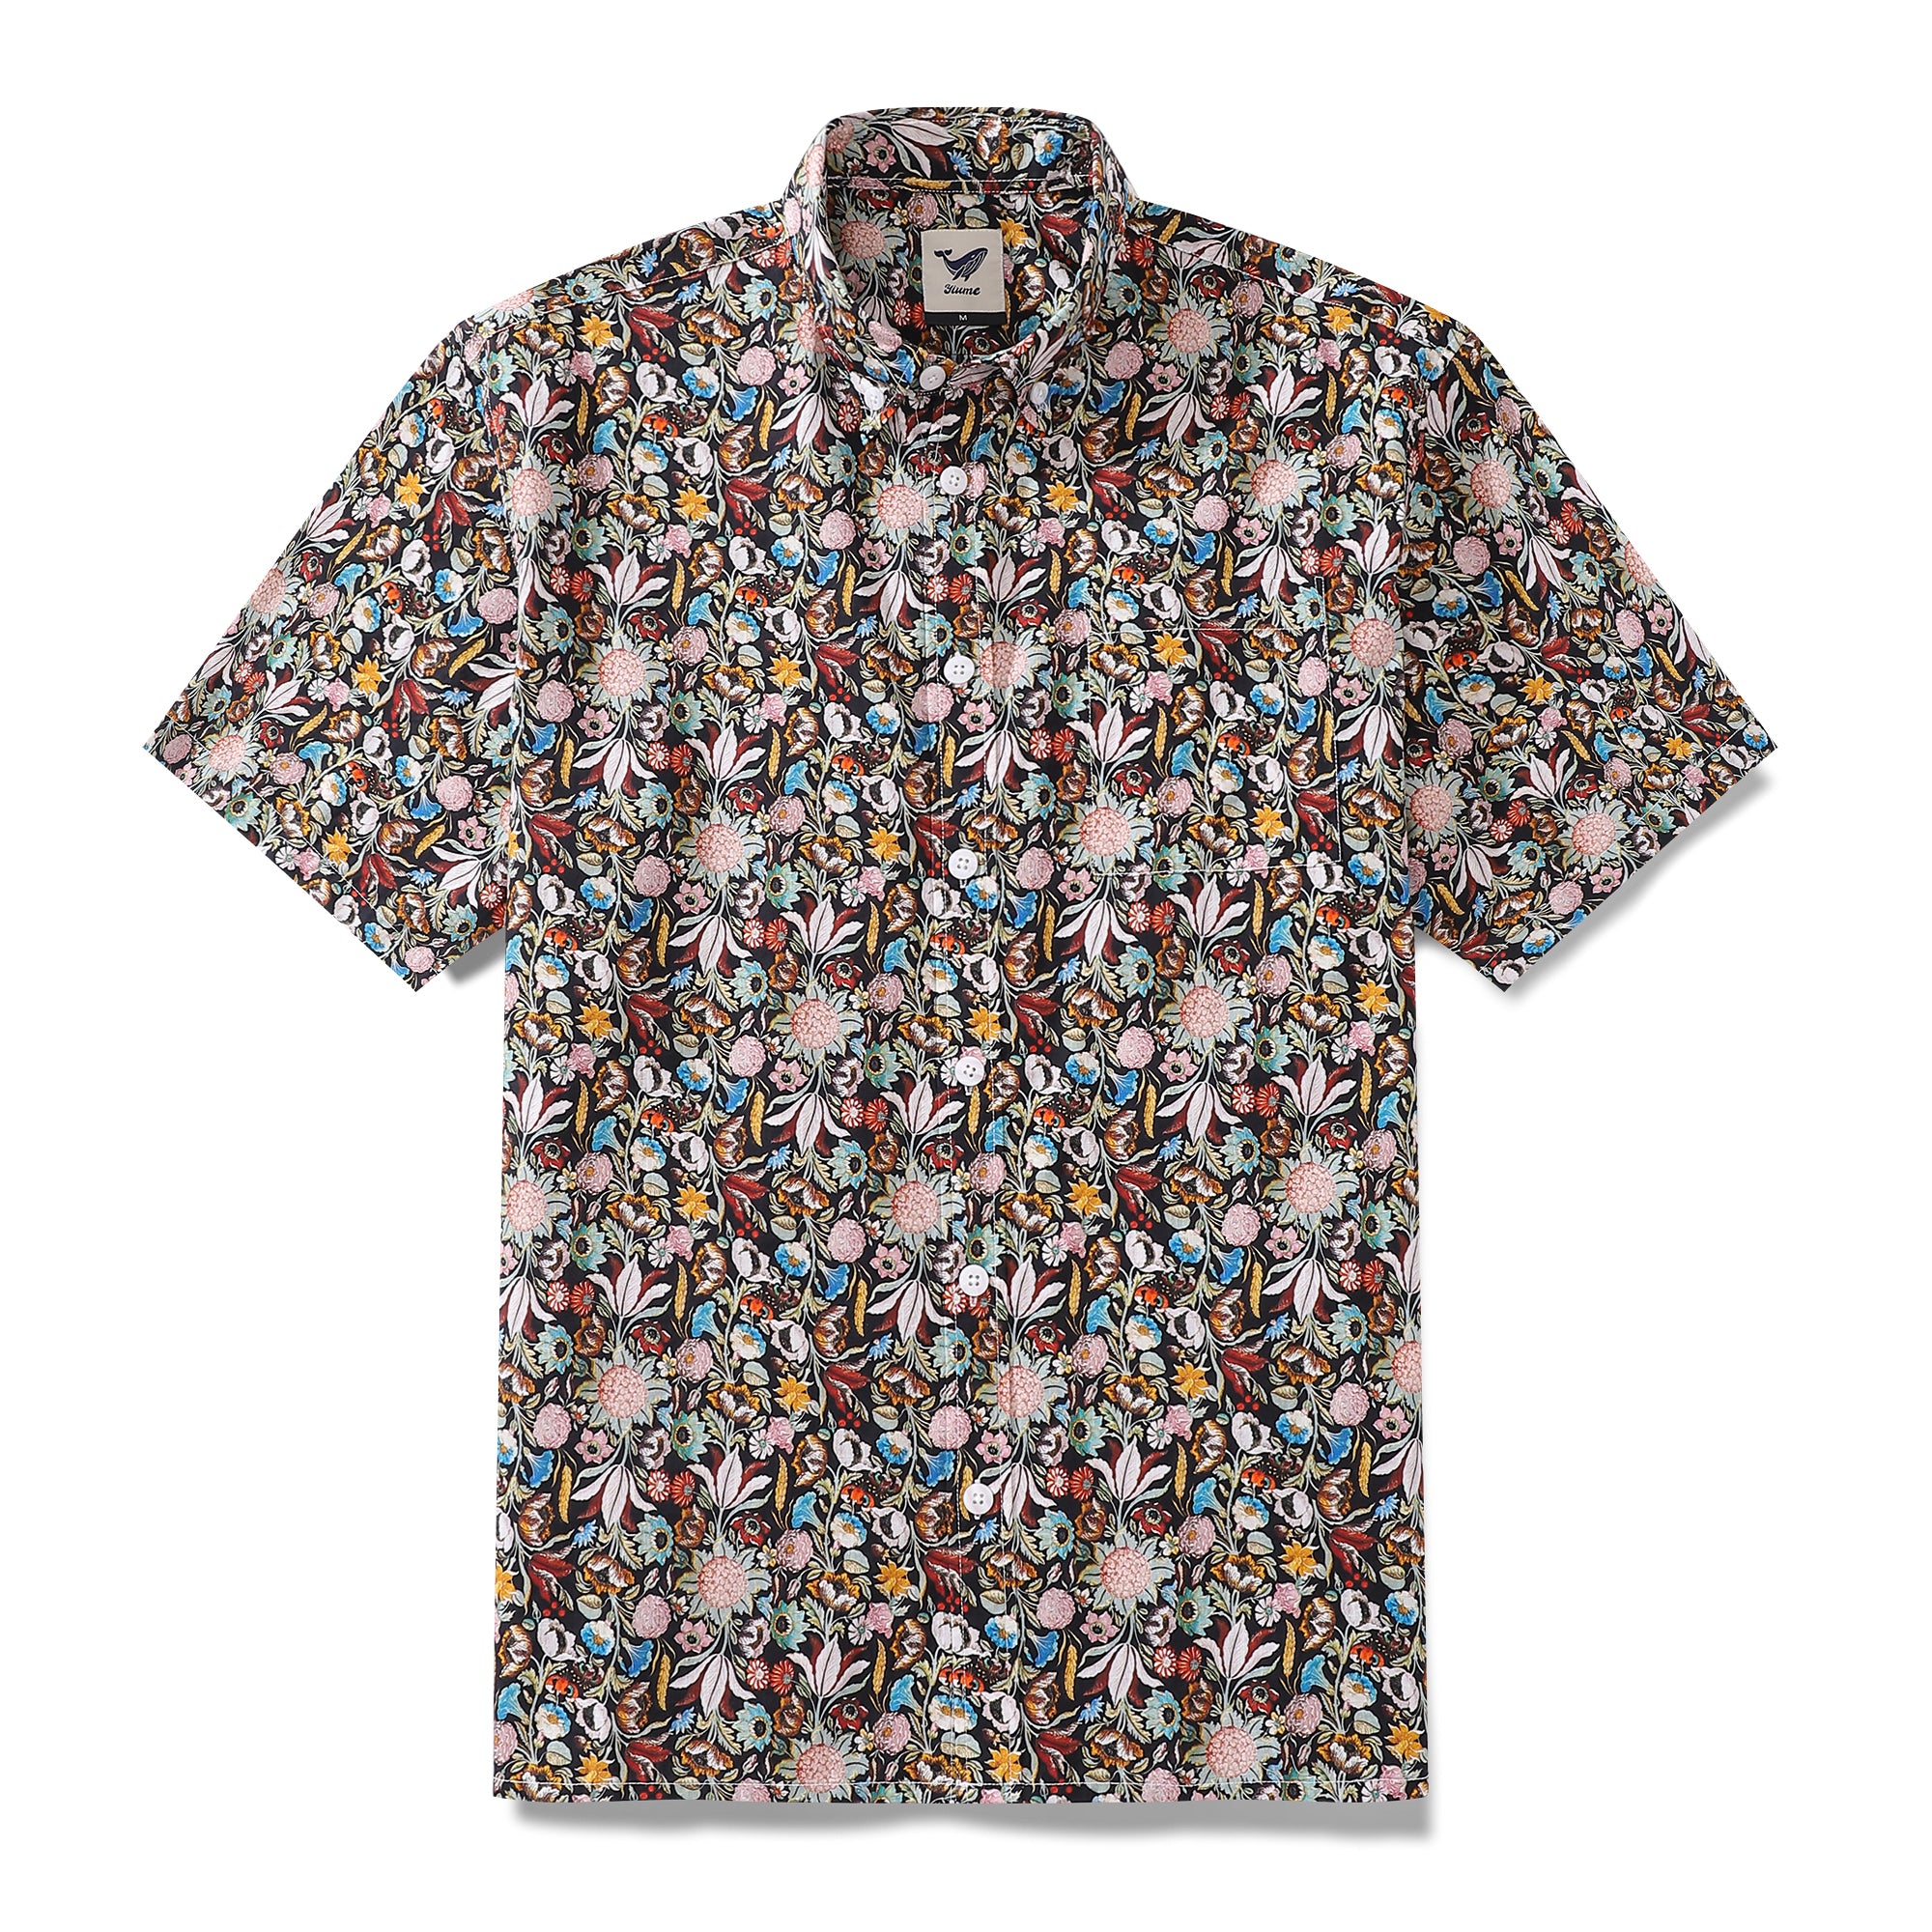 Men's Hawaiian Shirt Vintage Gothic Design Print Cotton Button-down Short Sleeve Aloha Shirt